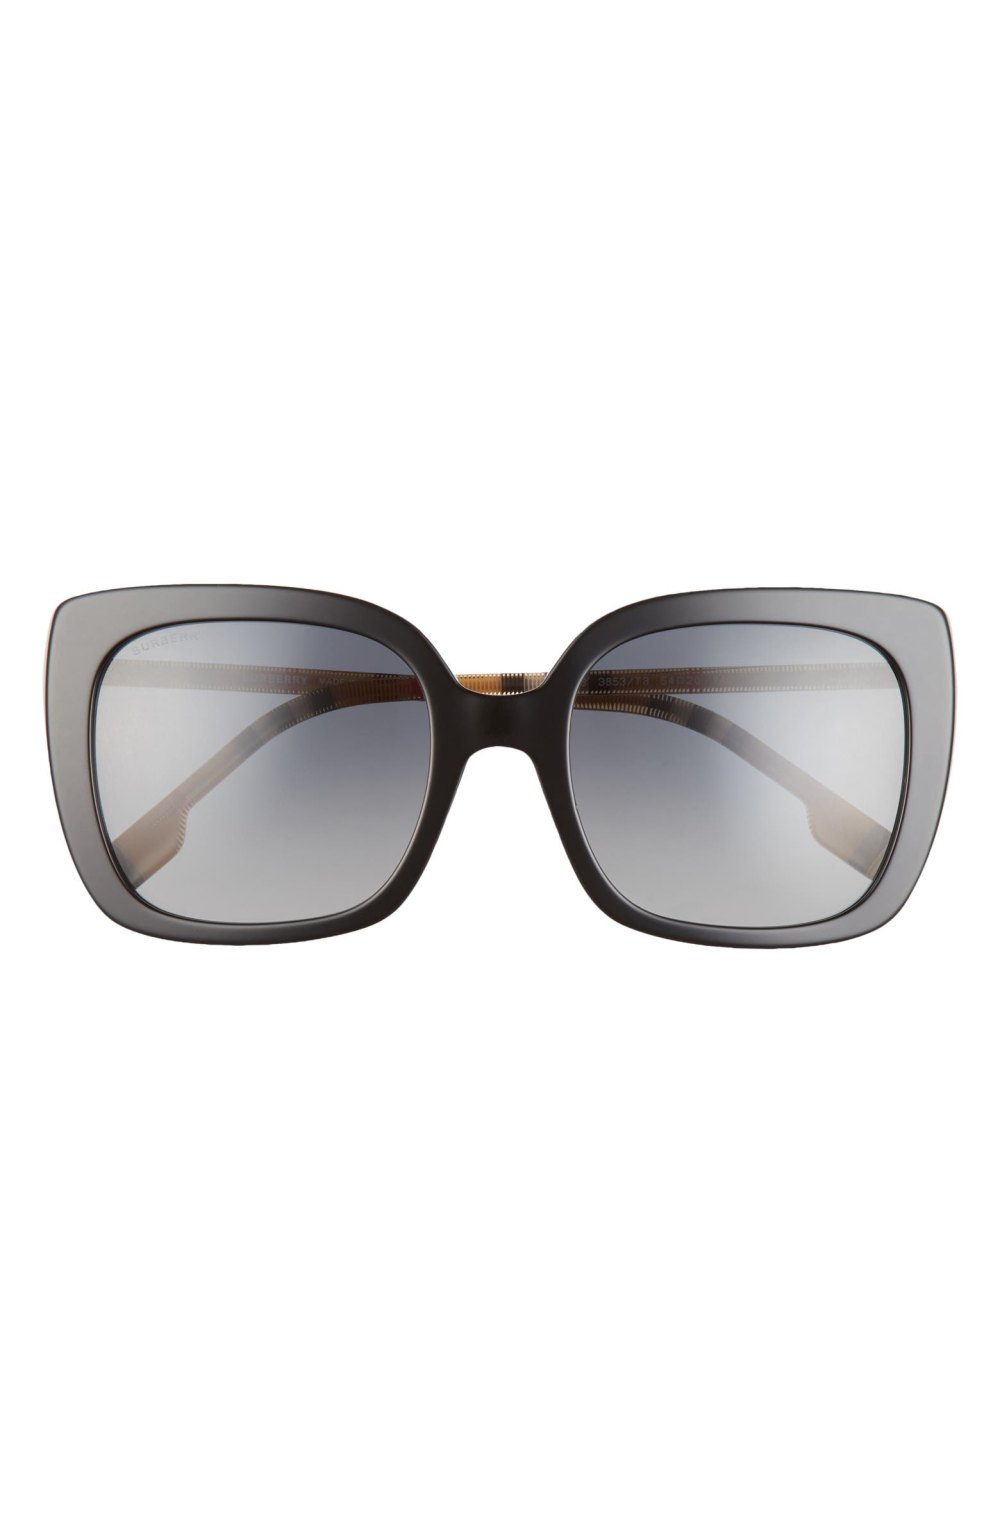 Burberry 54mm Polarized Square Sunglasses